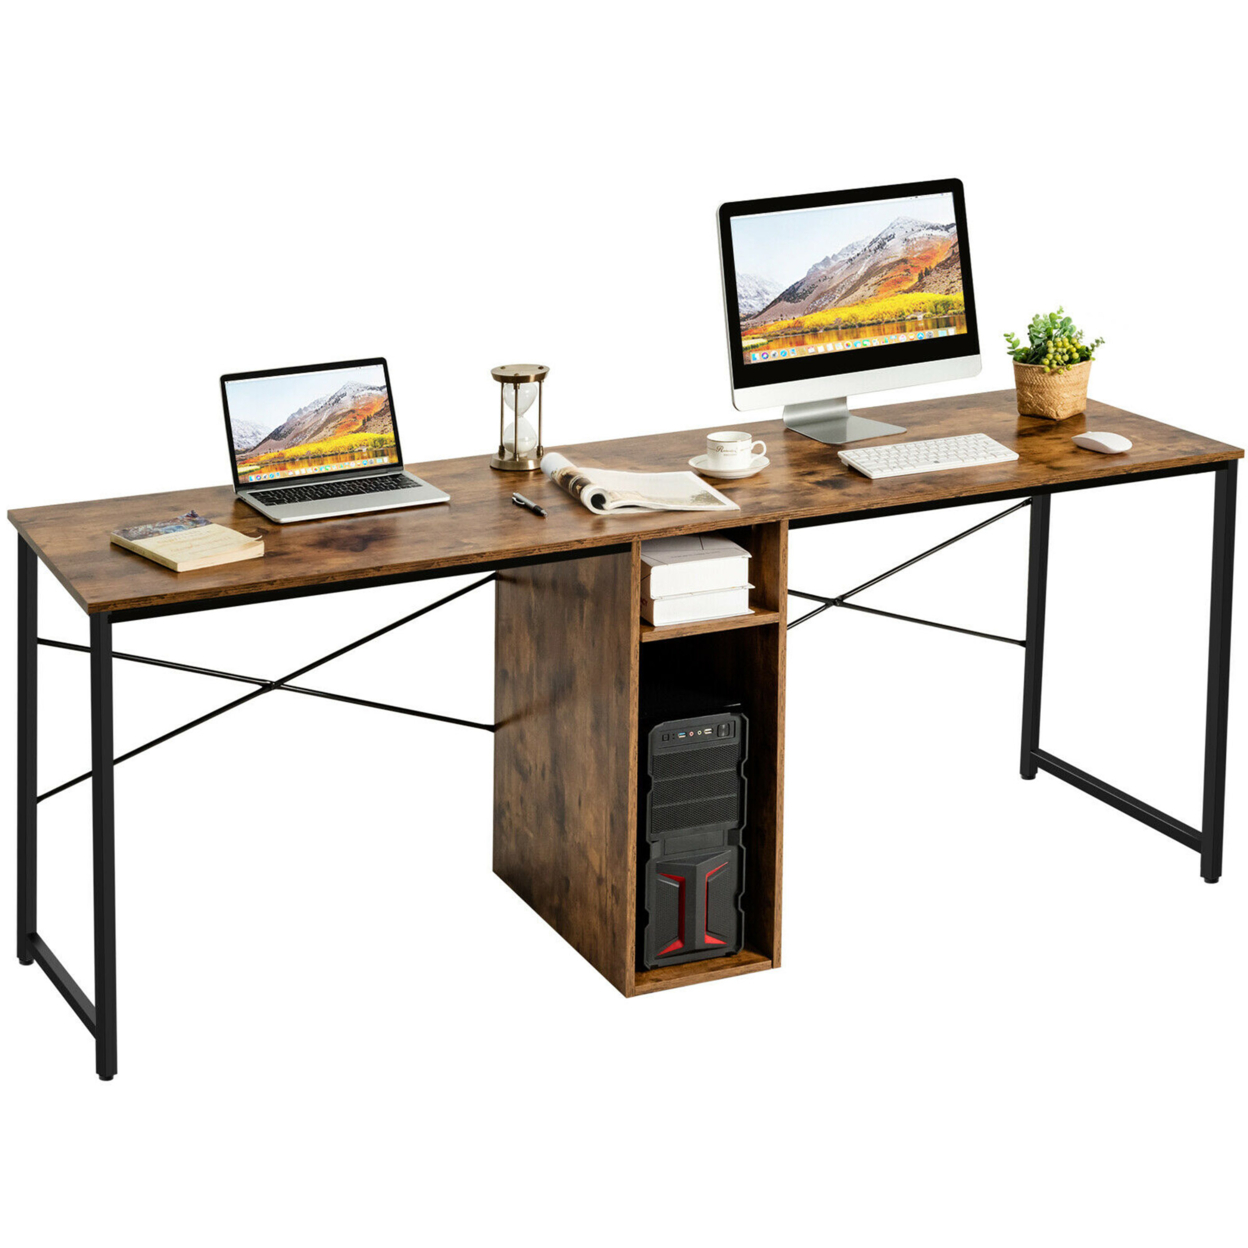 2 Person Computer Desk Double Workstation Office Desk W/ Storage - Rustic Brown